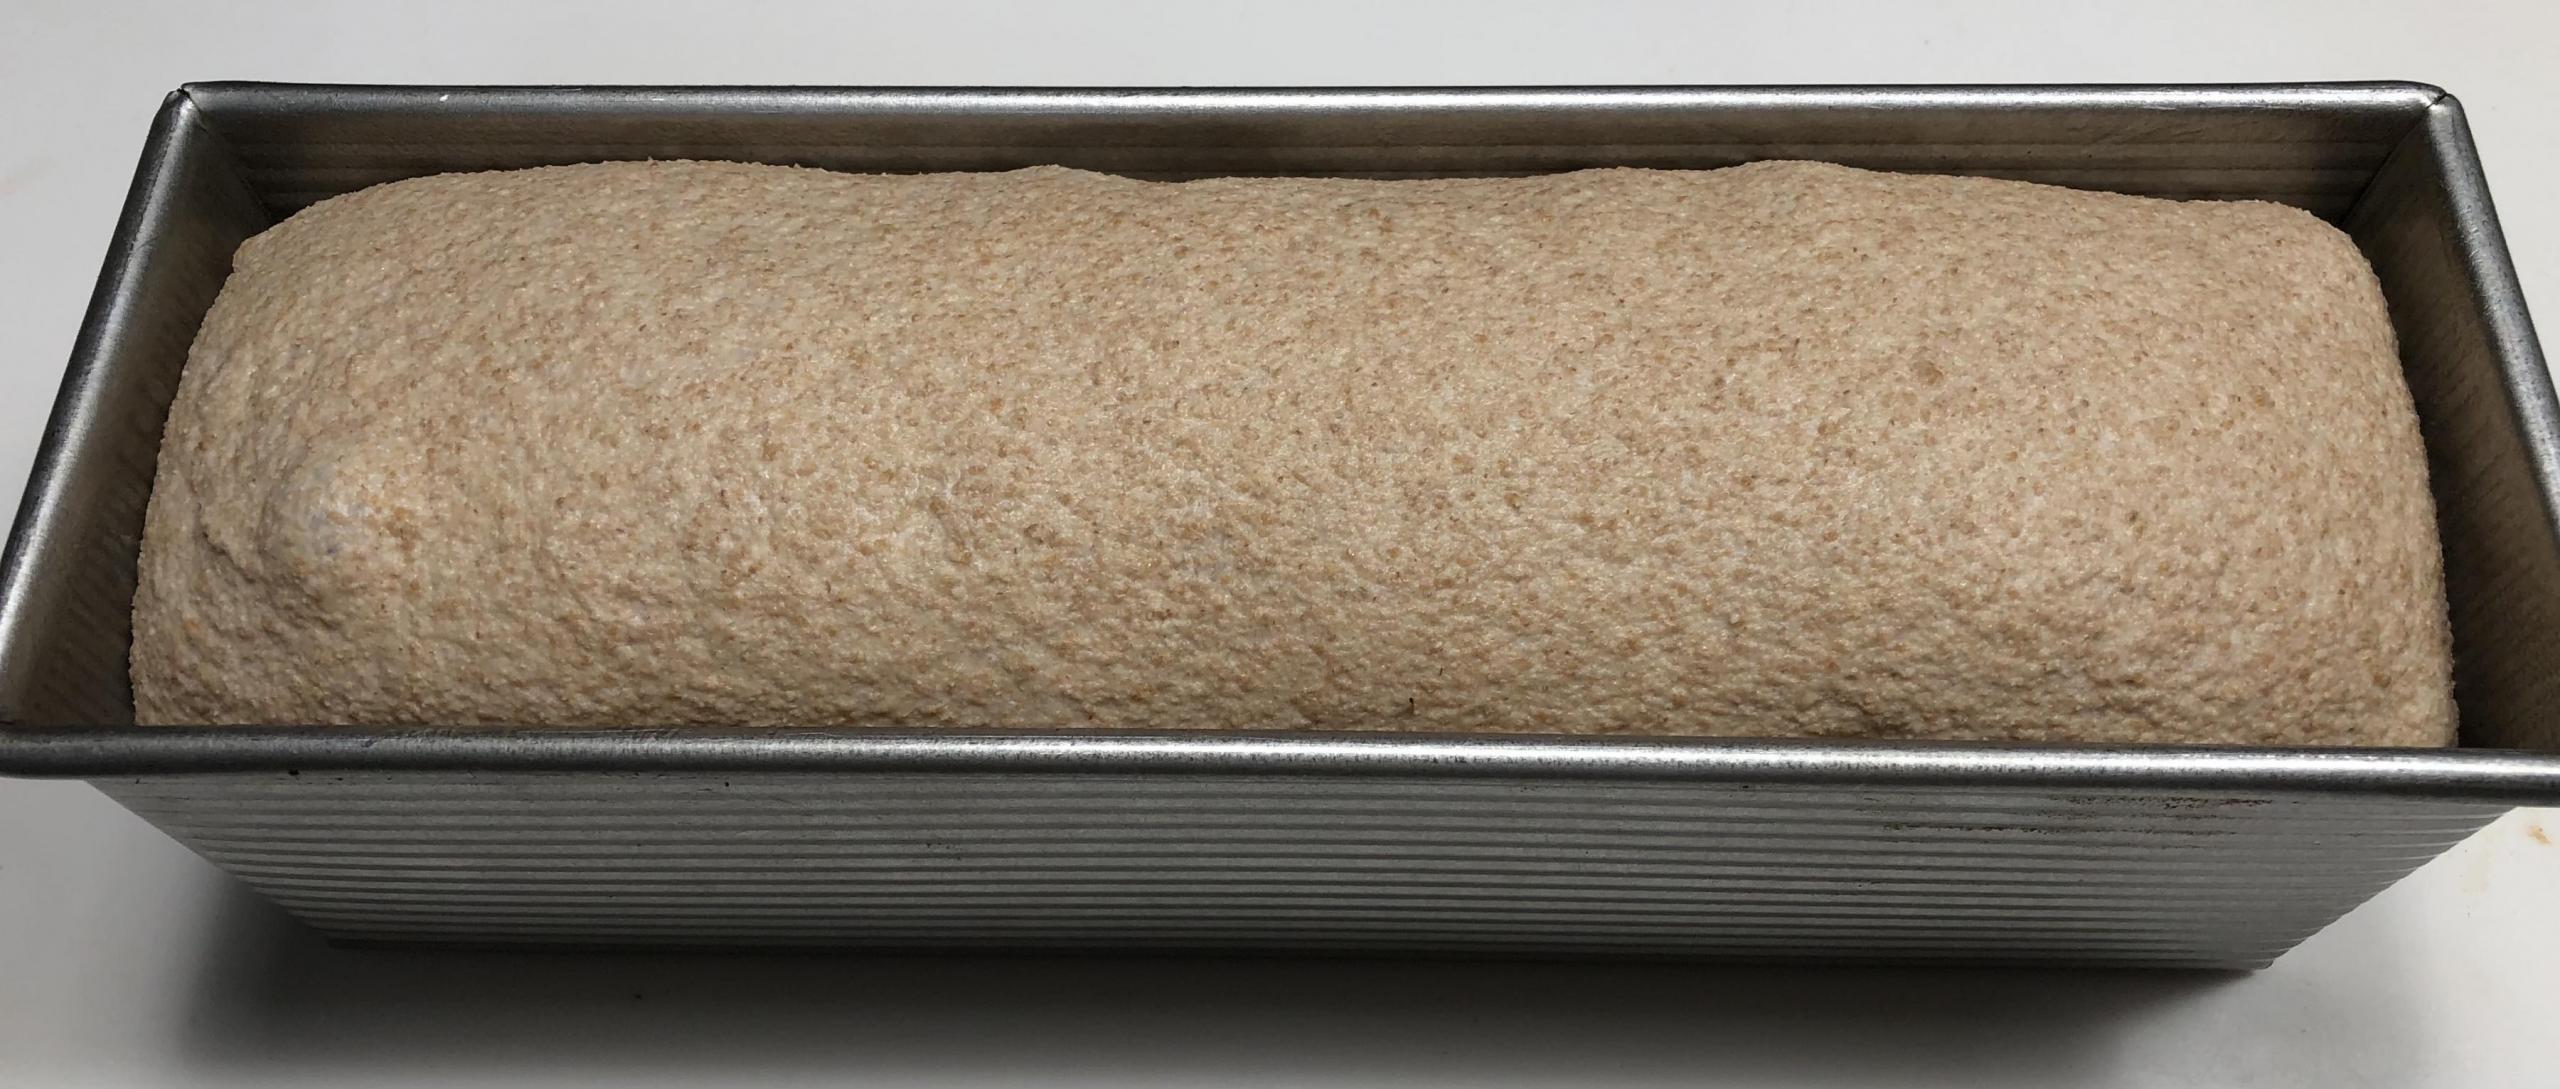 Pullman Loaf Pan (USA PAN) 9x4x4 inch 